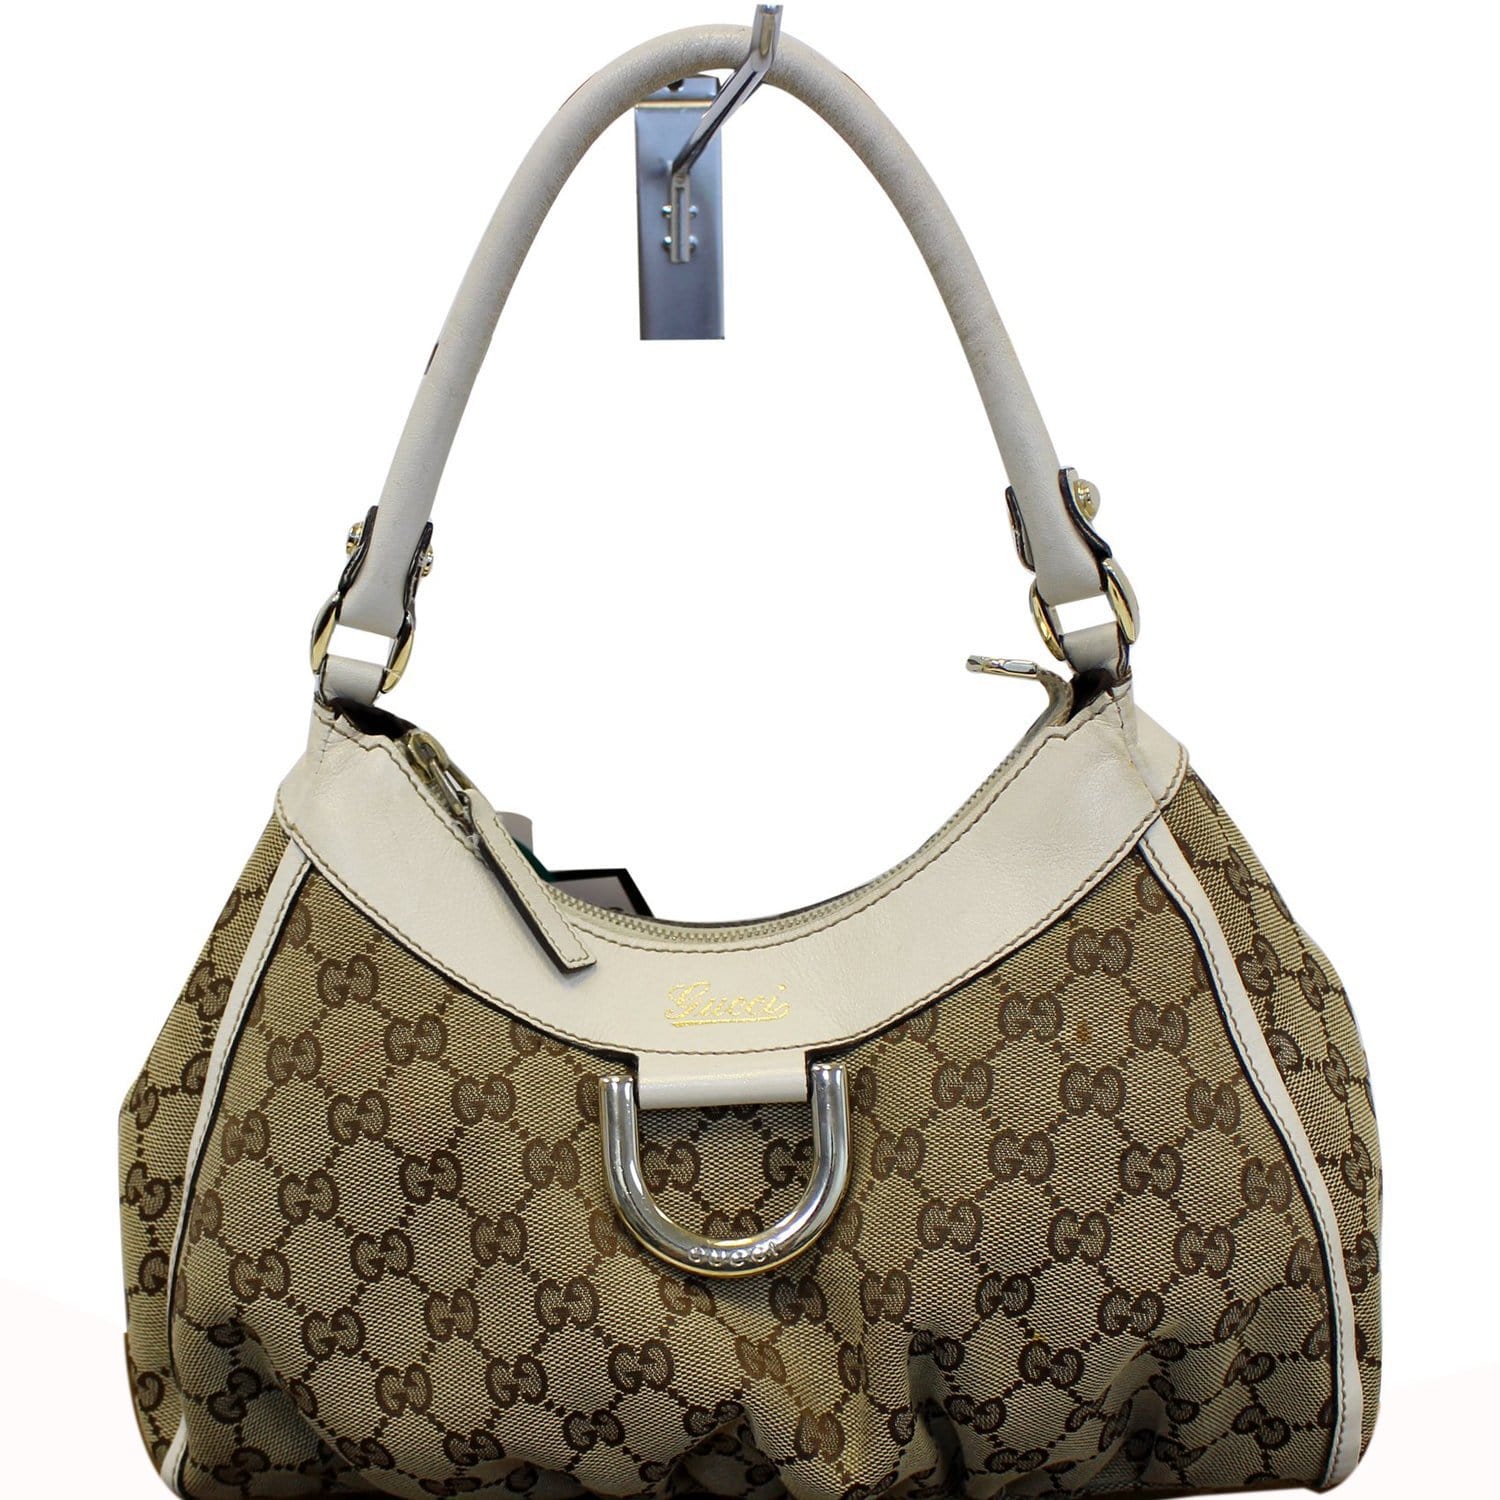 Gucci Bags for Women, Gucci Handbags